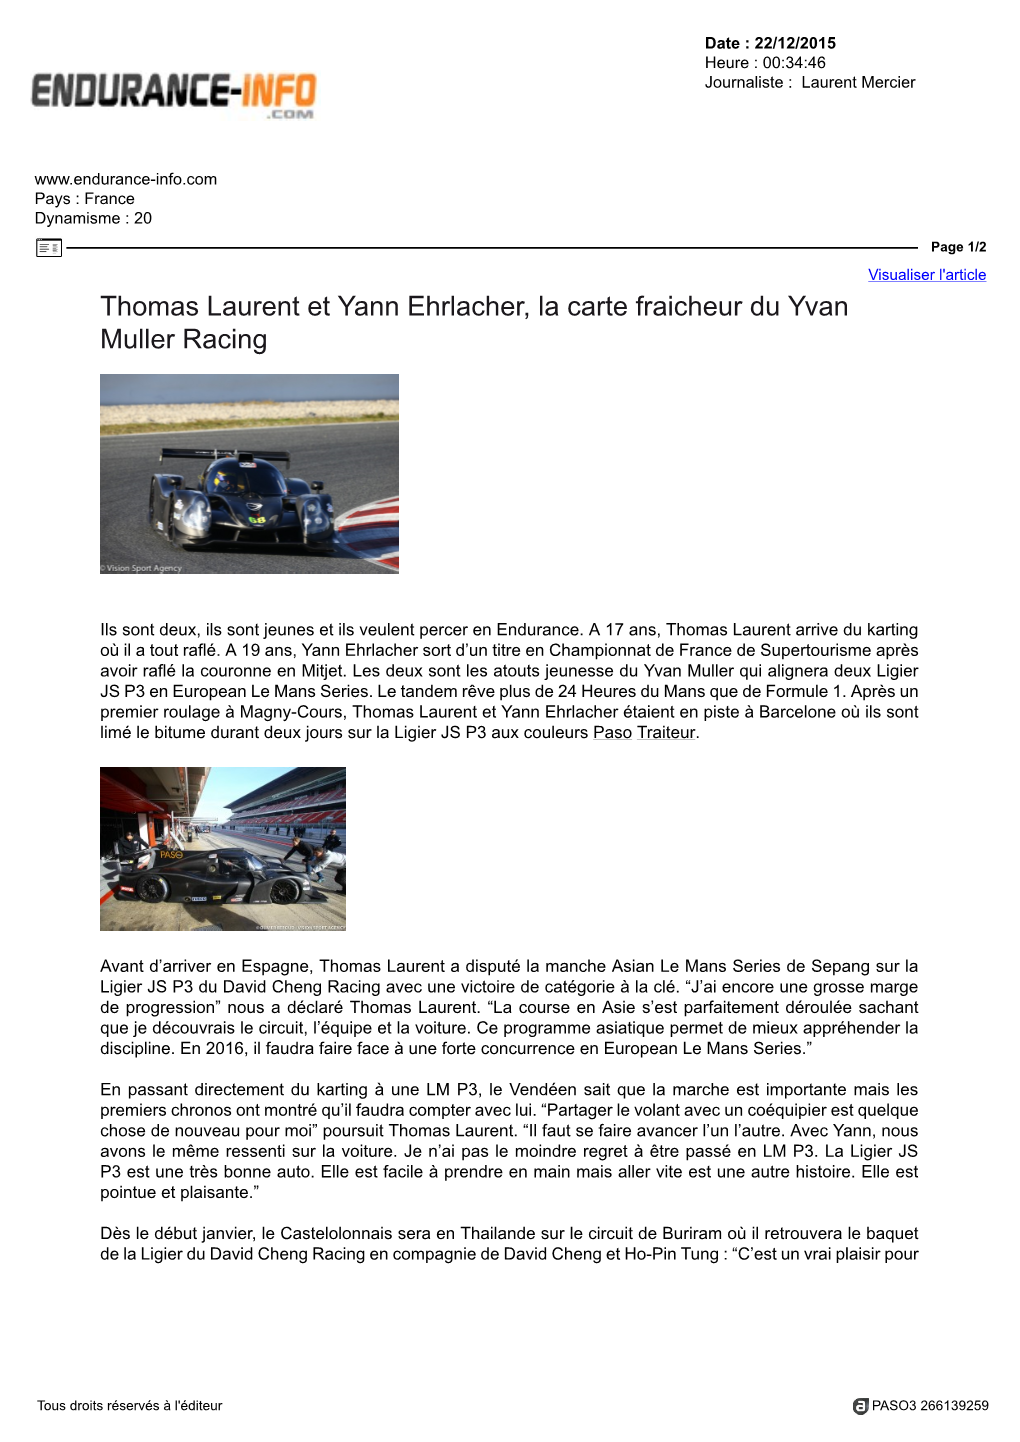 Thomas Laurent Et Yann Ehrlacher, La Carte Fraicheur Du Yvan Muller Racing